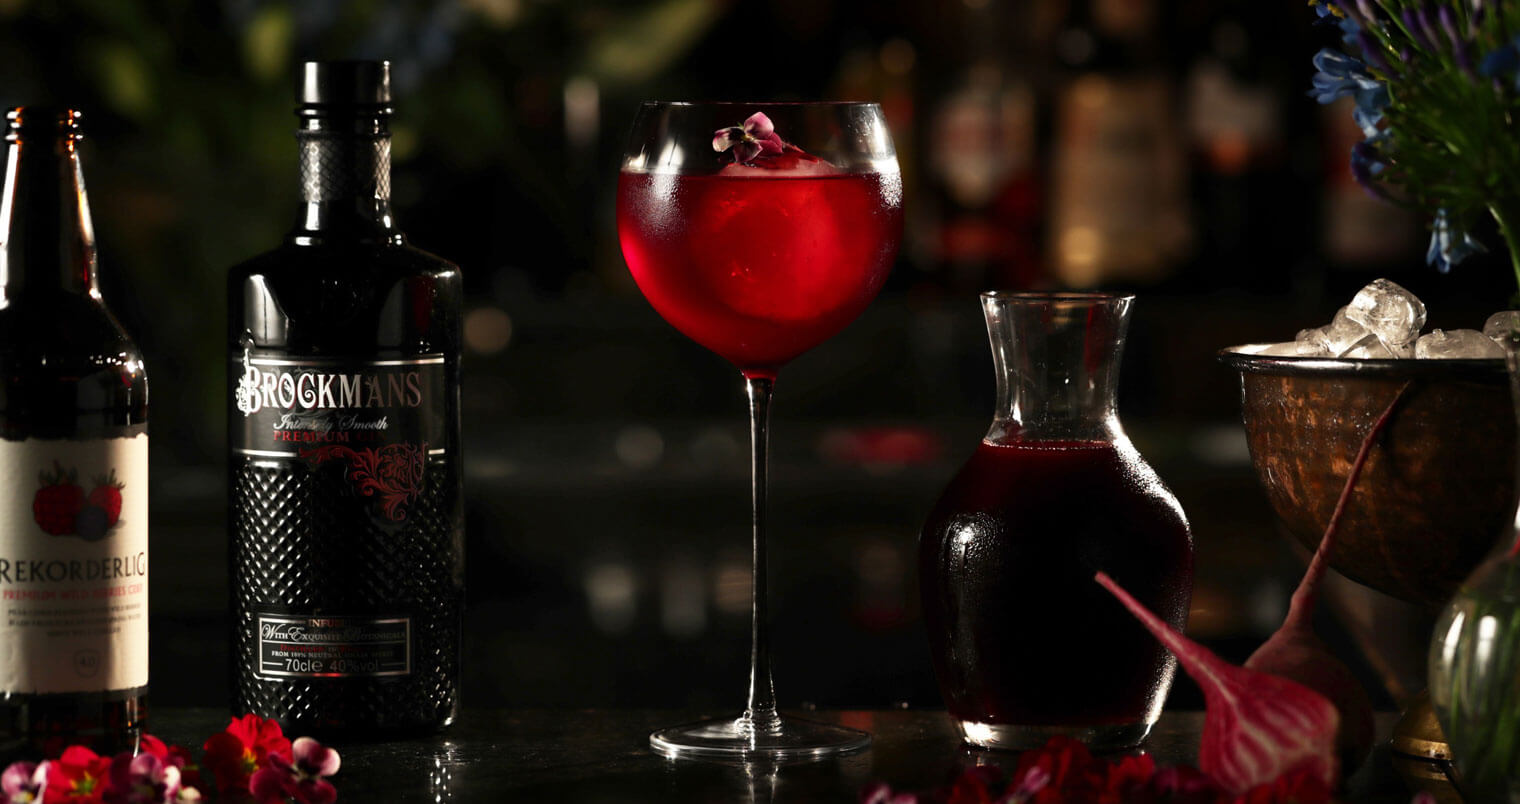 Purple Spring, cocktail with garnishes, dark background, featured image